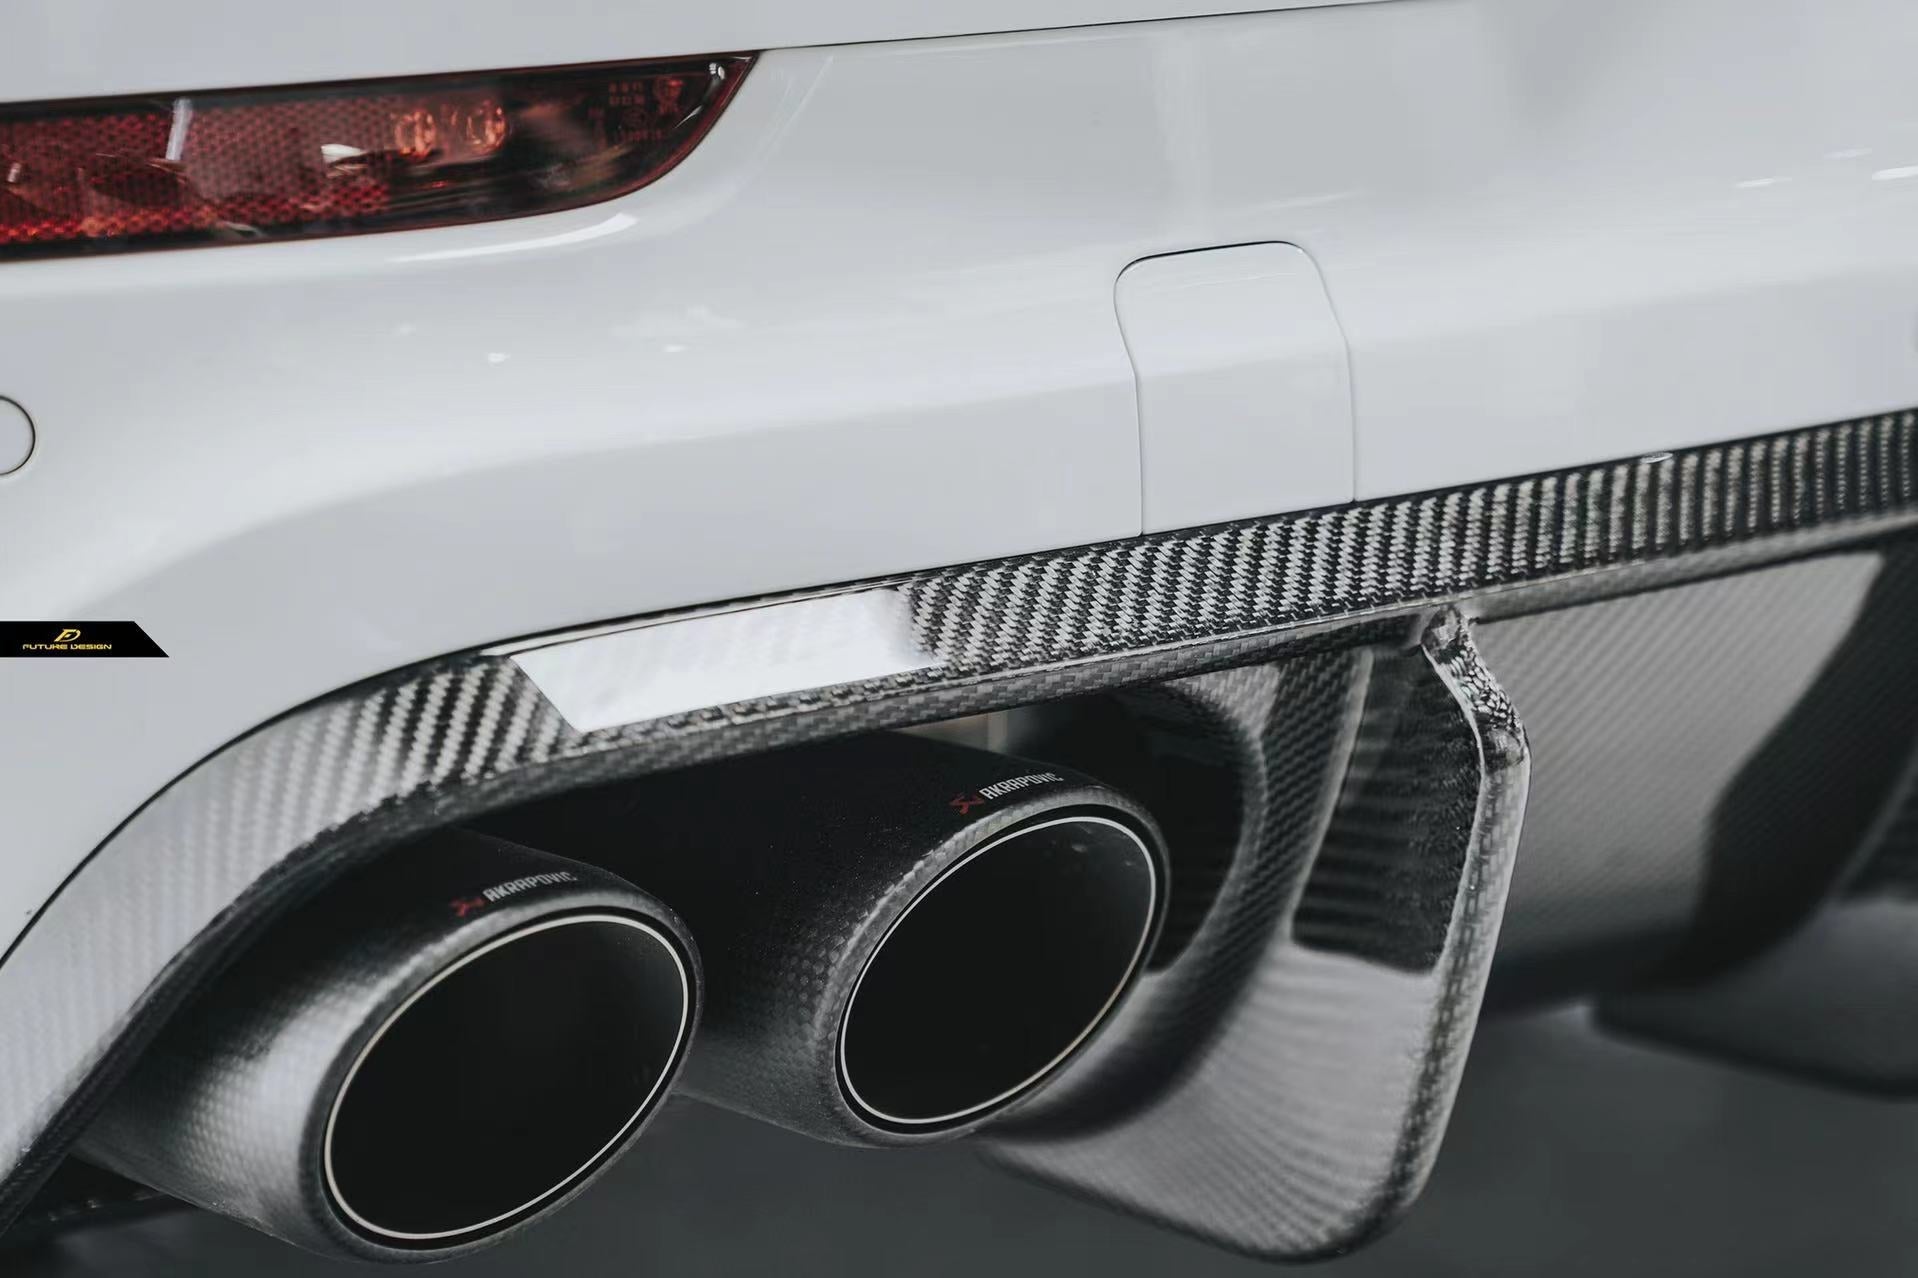 Future Design Carbon Fiber REAR DIFFUSER for Porsche Cayenne Coupe 9Y3